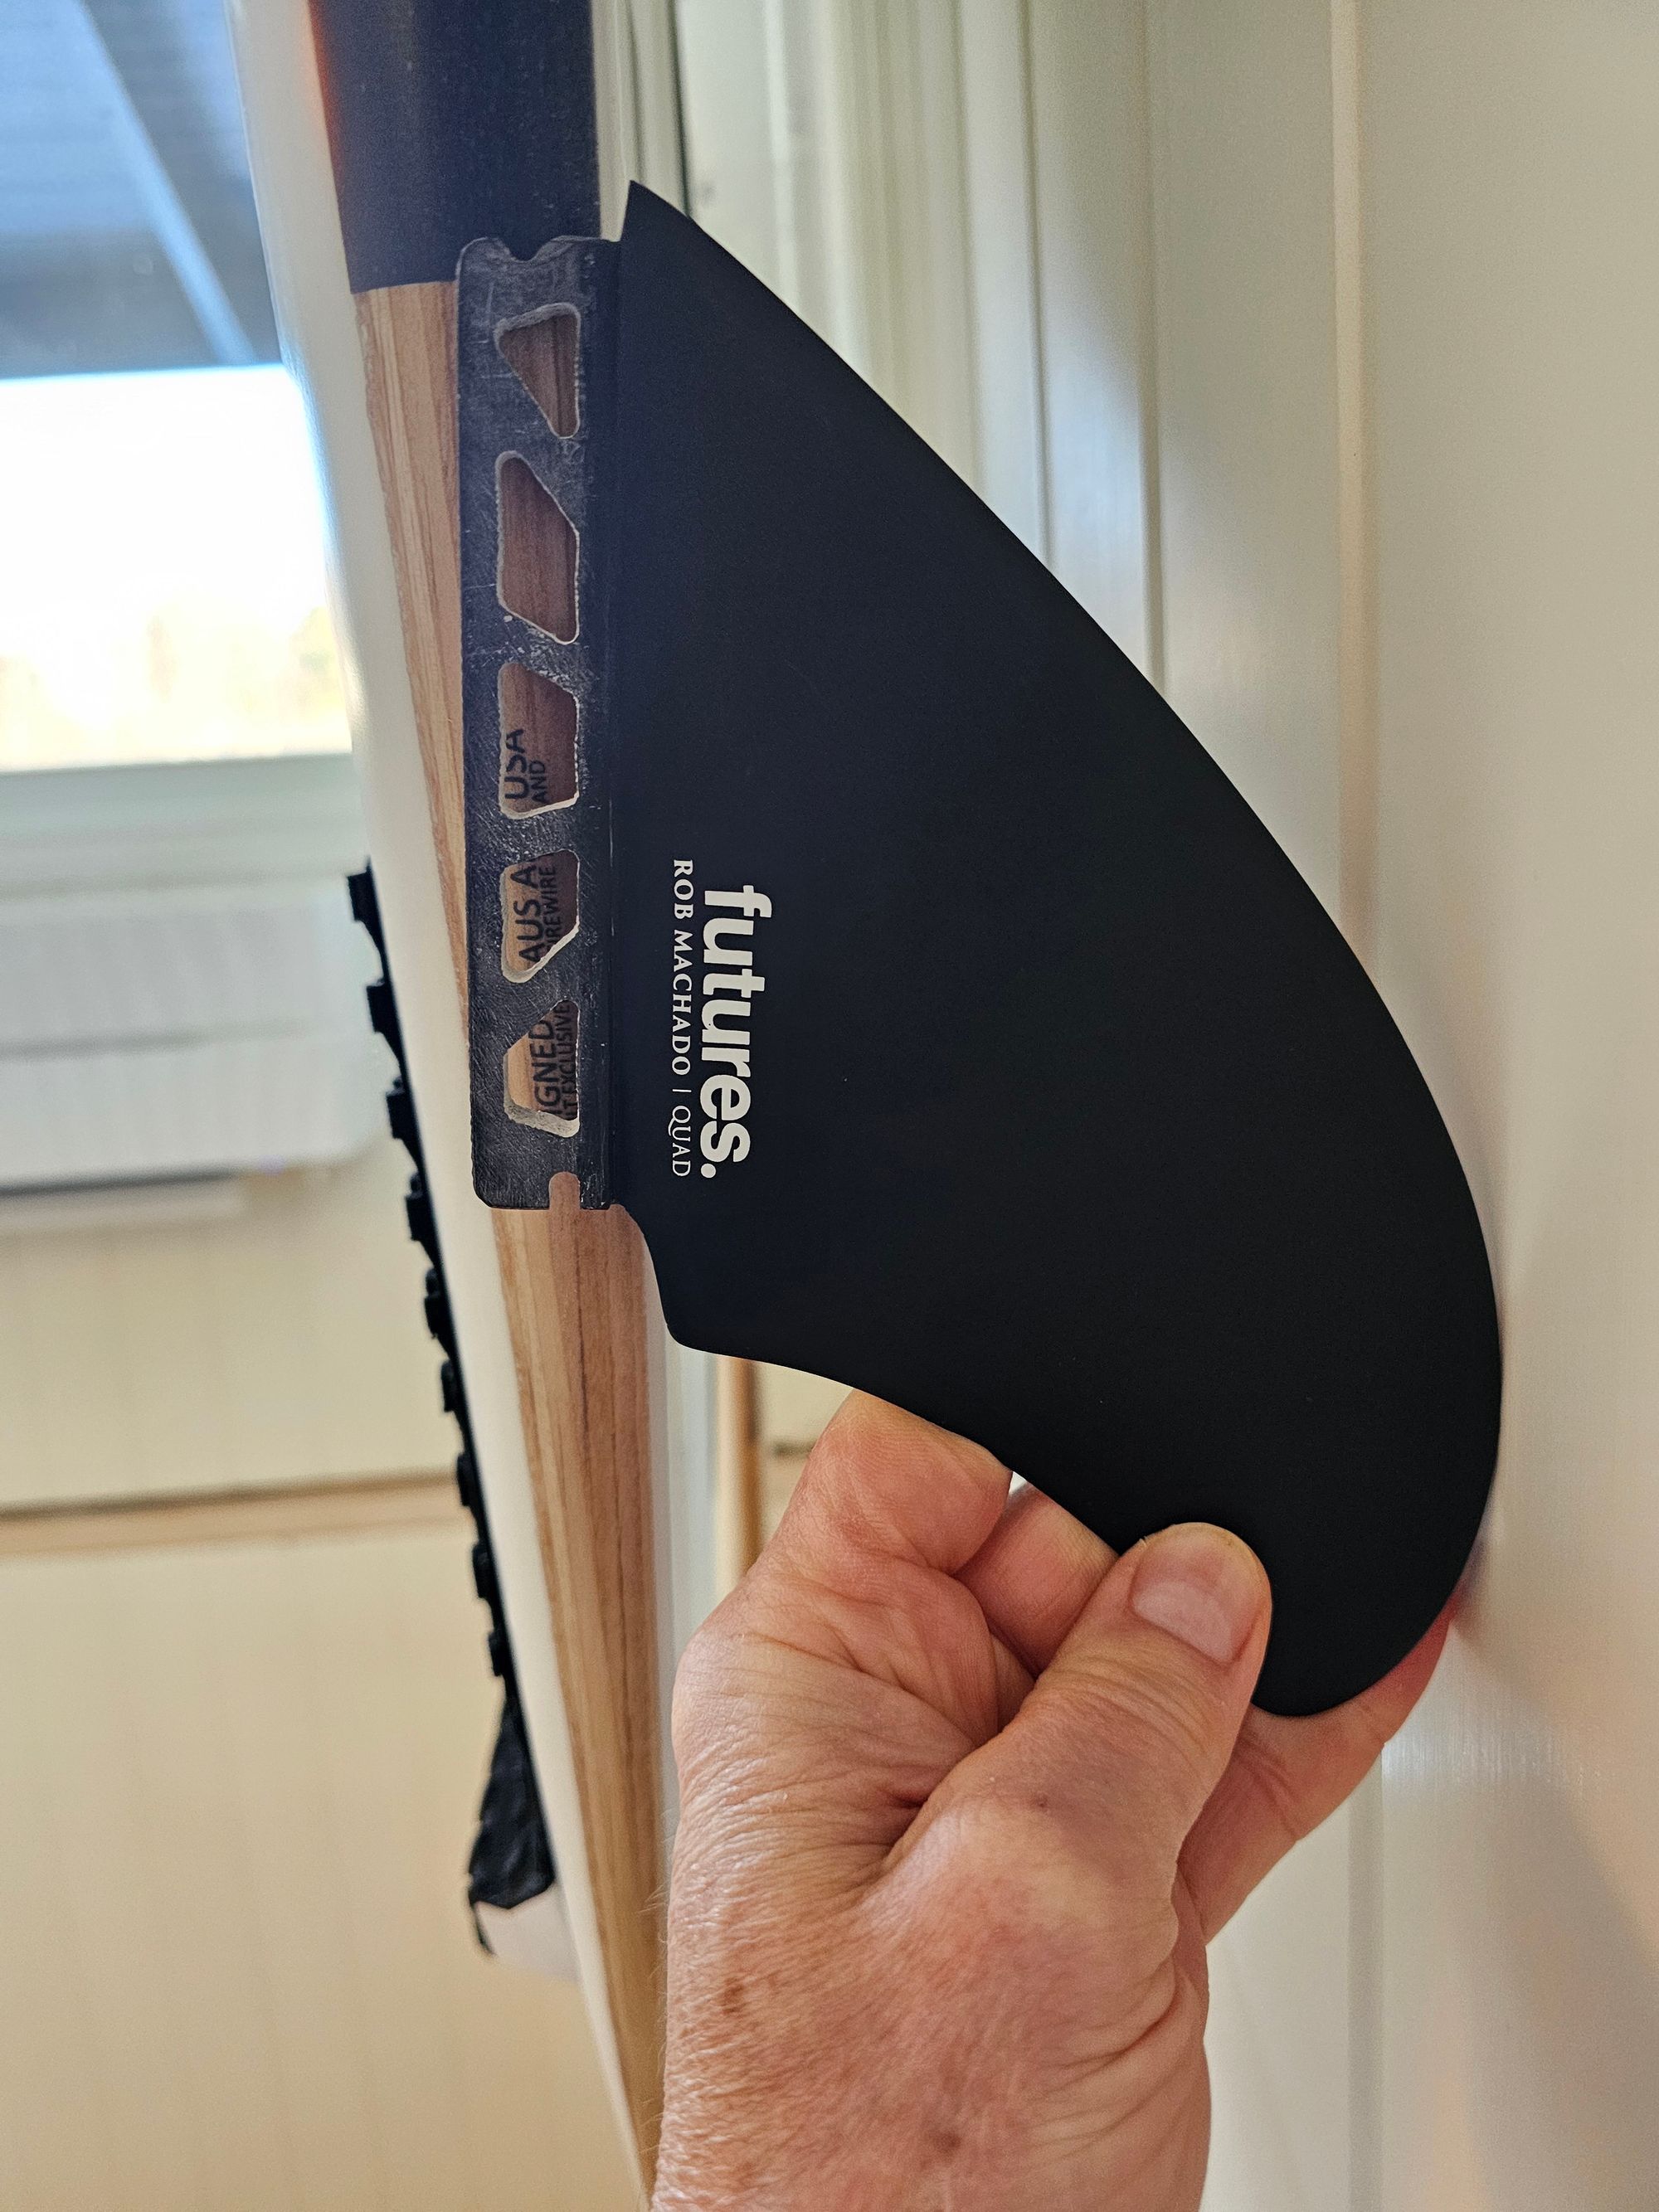 The half-great O+E vertical surfboard display rack